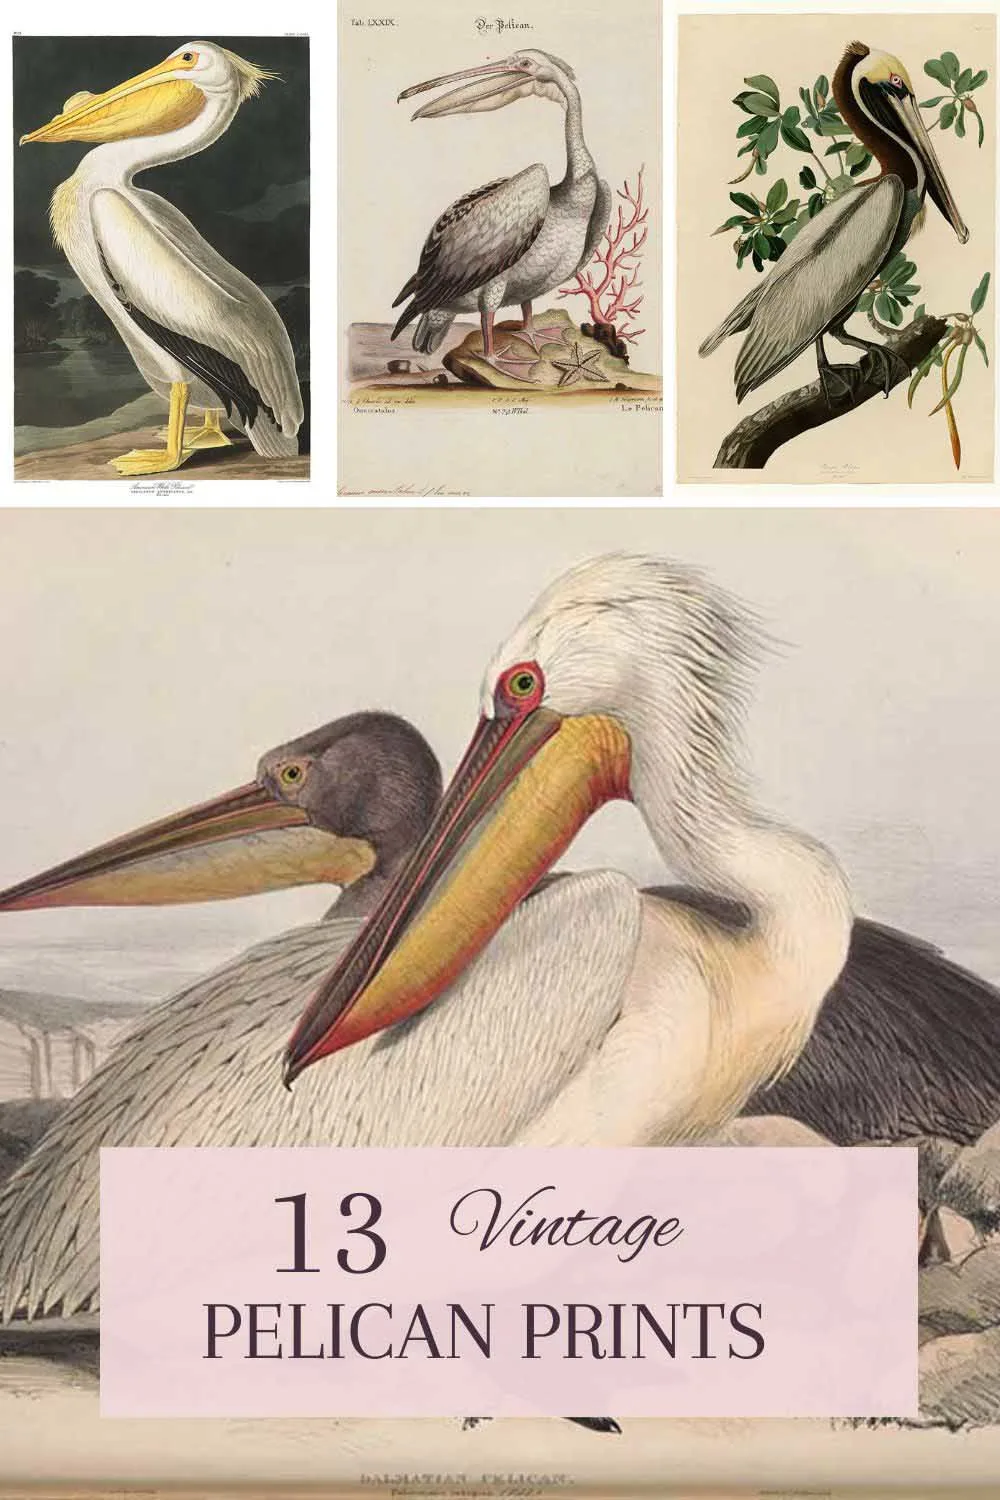 Audubon Pelican Print and other pelican illustrations